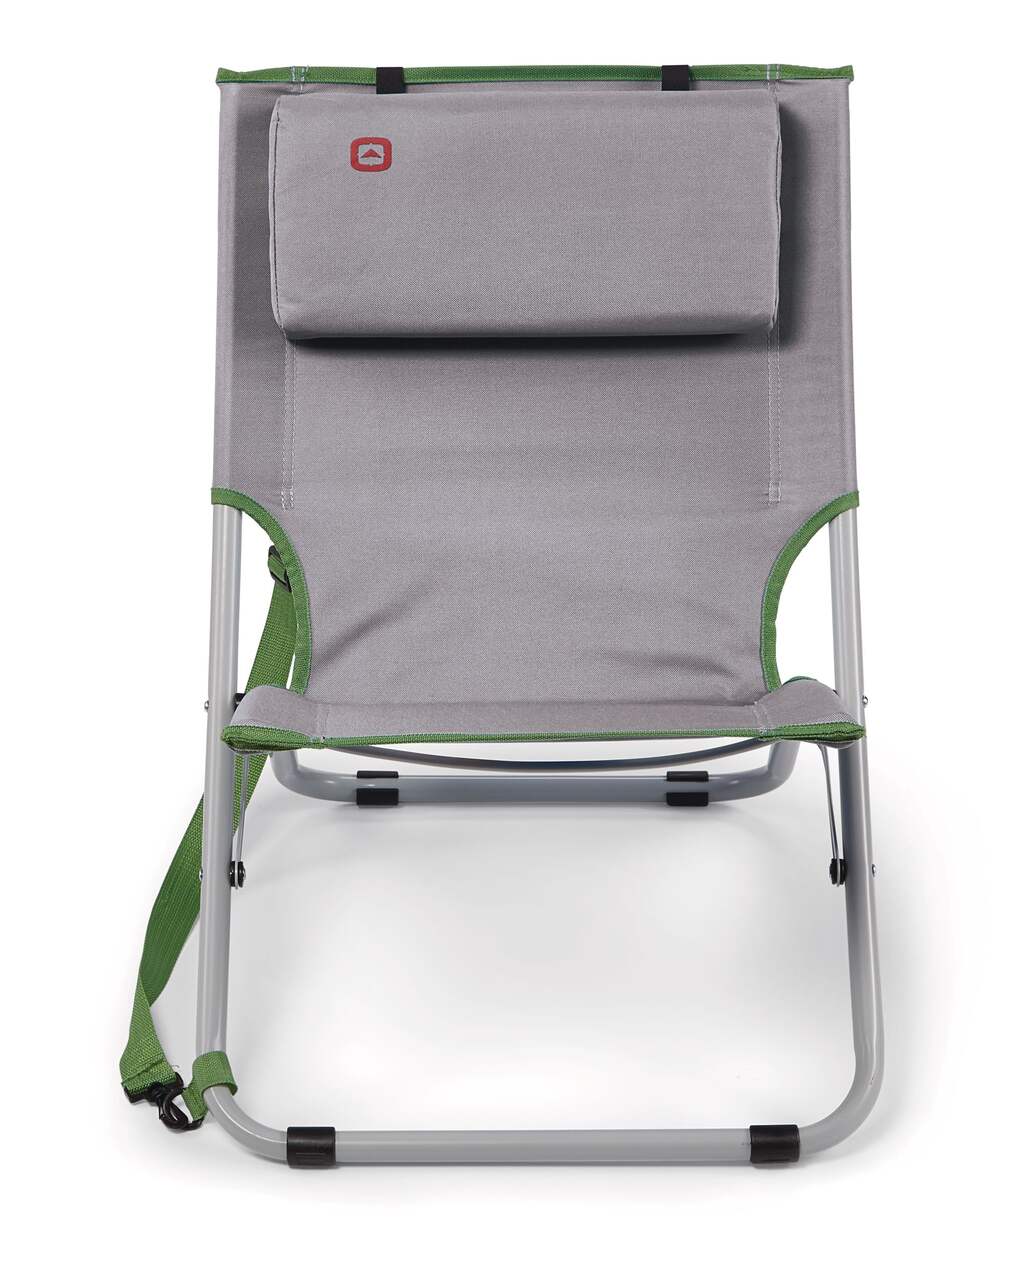 Outbound Malibu Portable Folding Low-Profile Beach Chair w